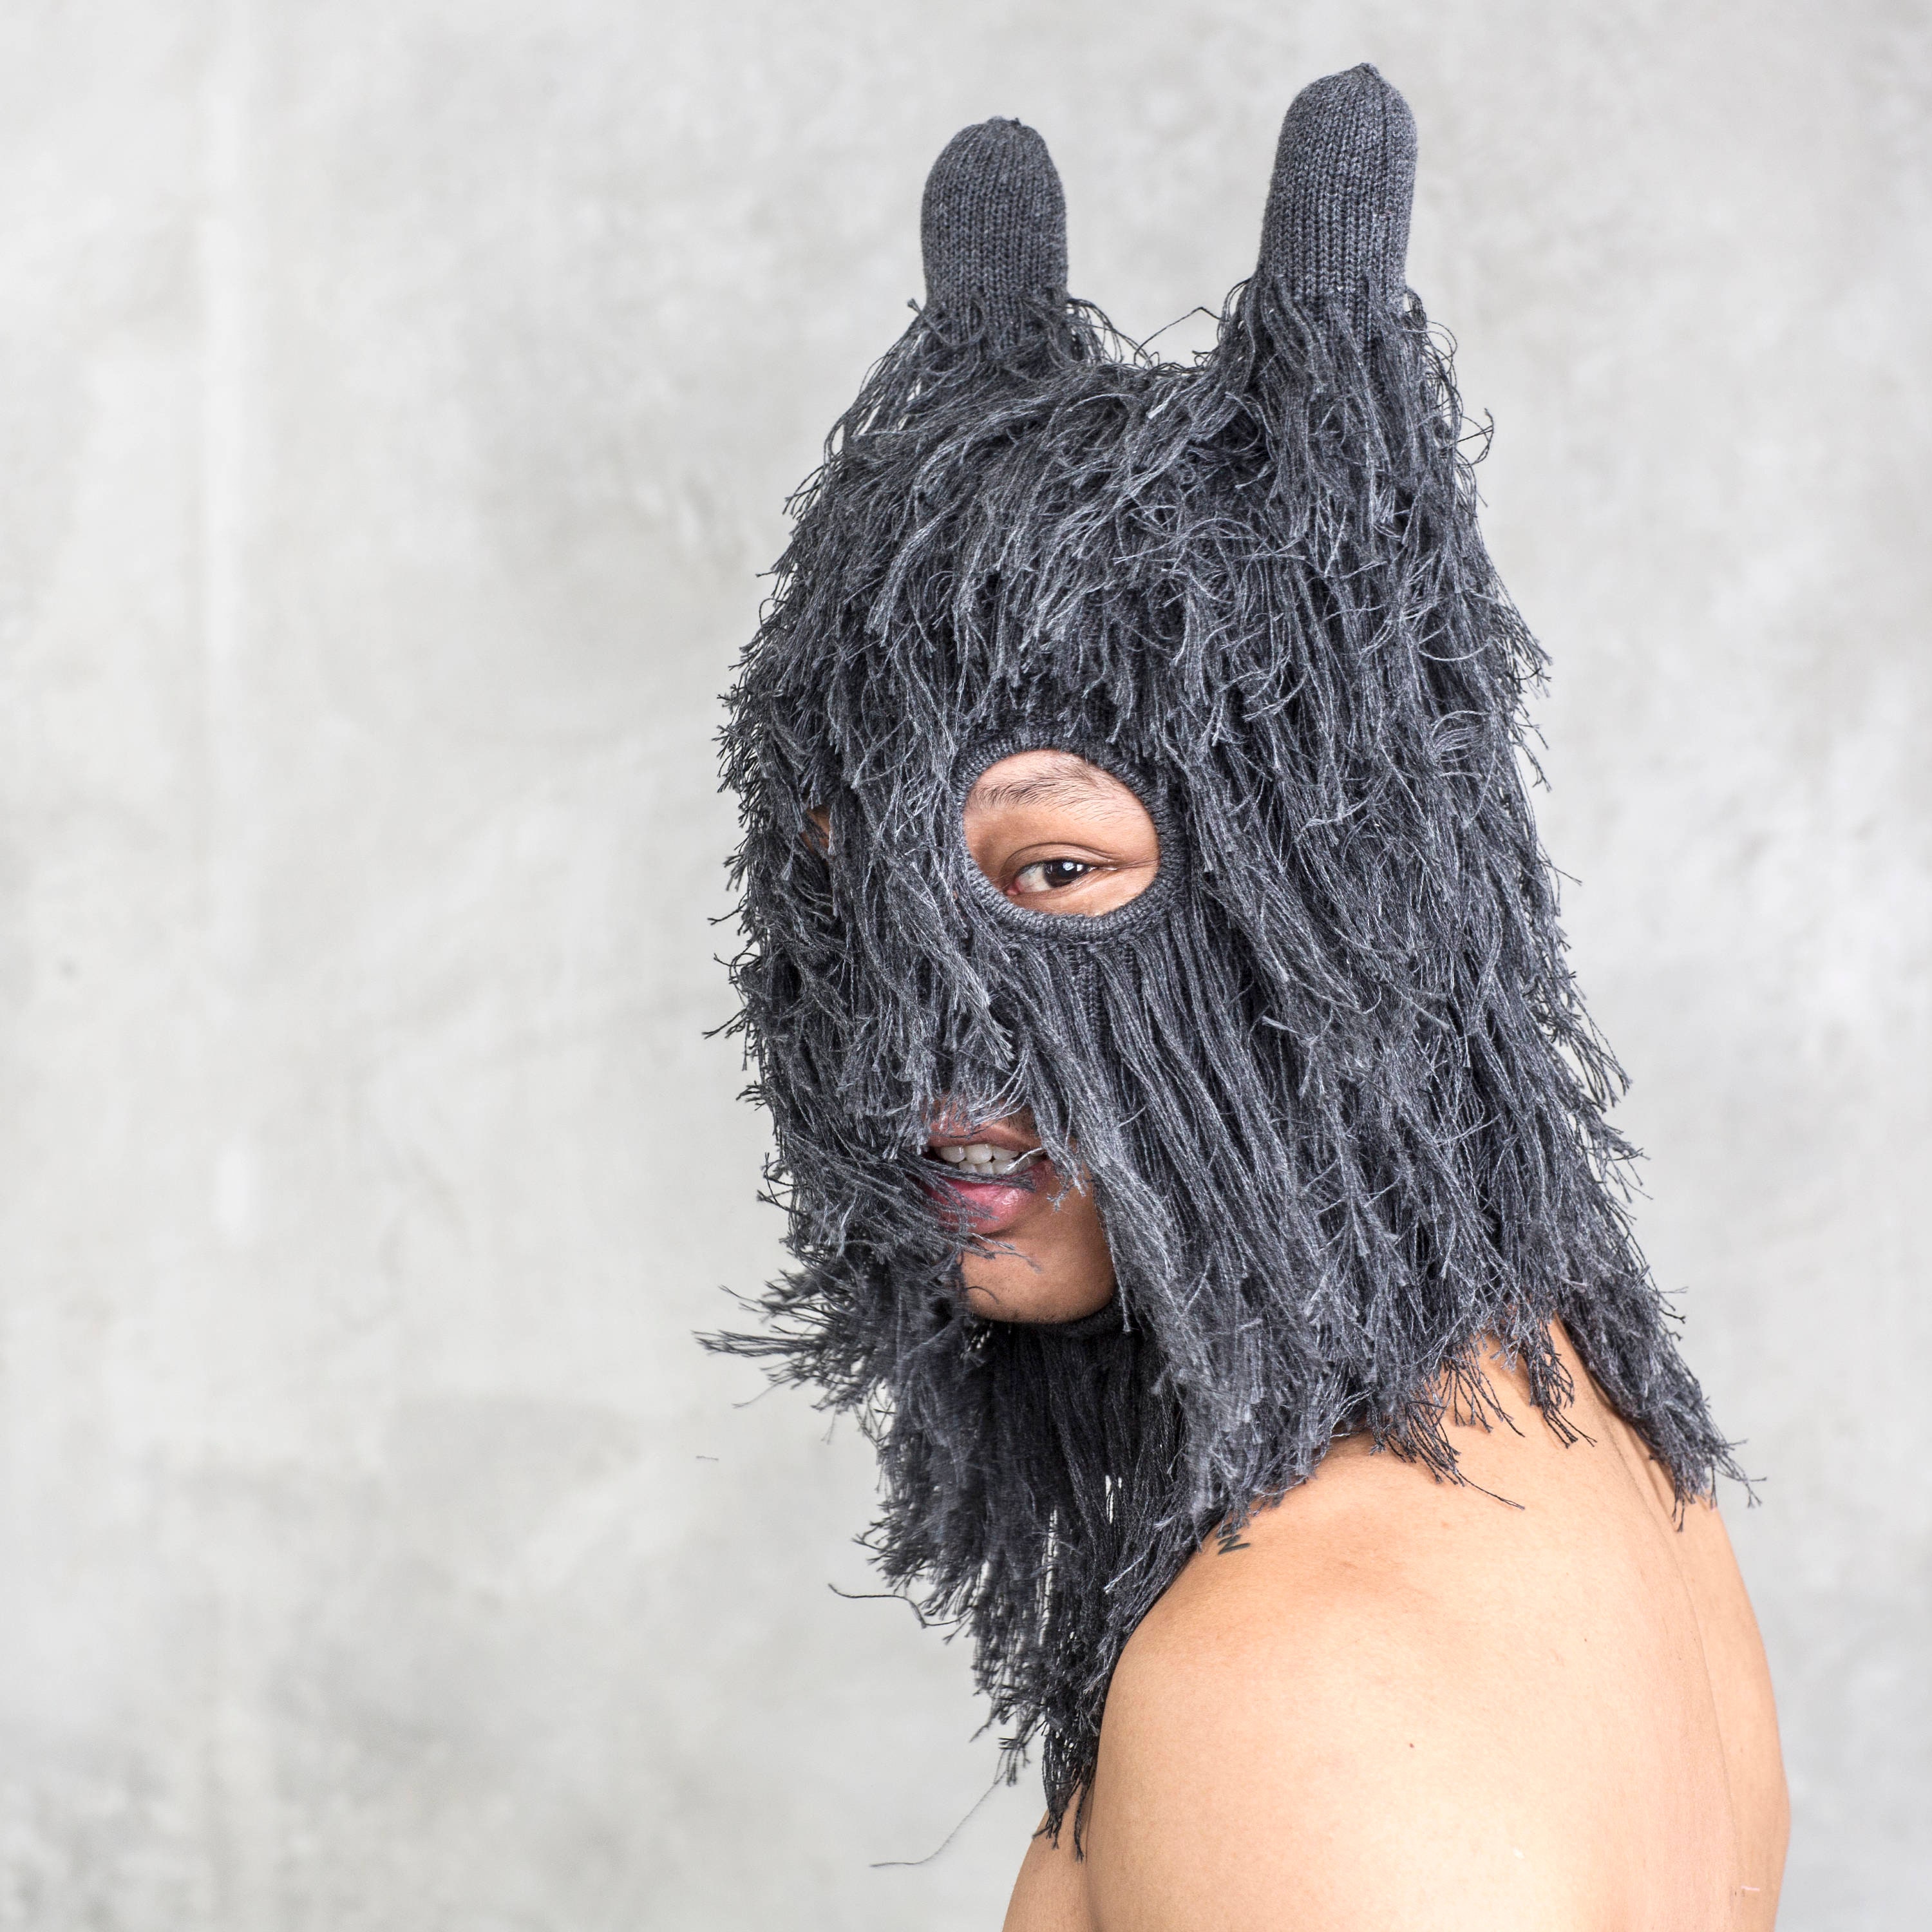 Rambut Hairy Creature Mask - Handmade Balaclava For Men & Women Surreal Goat? Yeti? Monster Fun Cotton Knit W/Horns